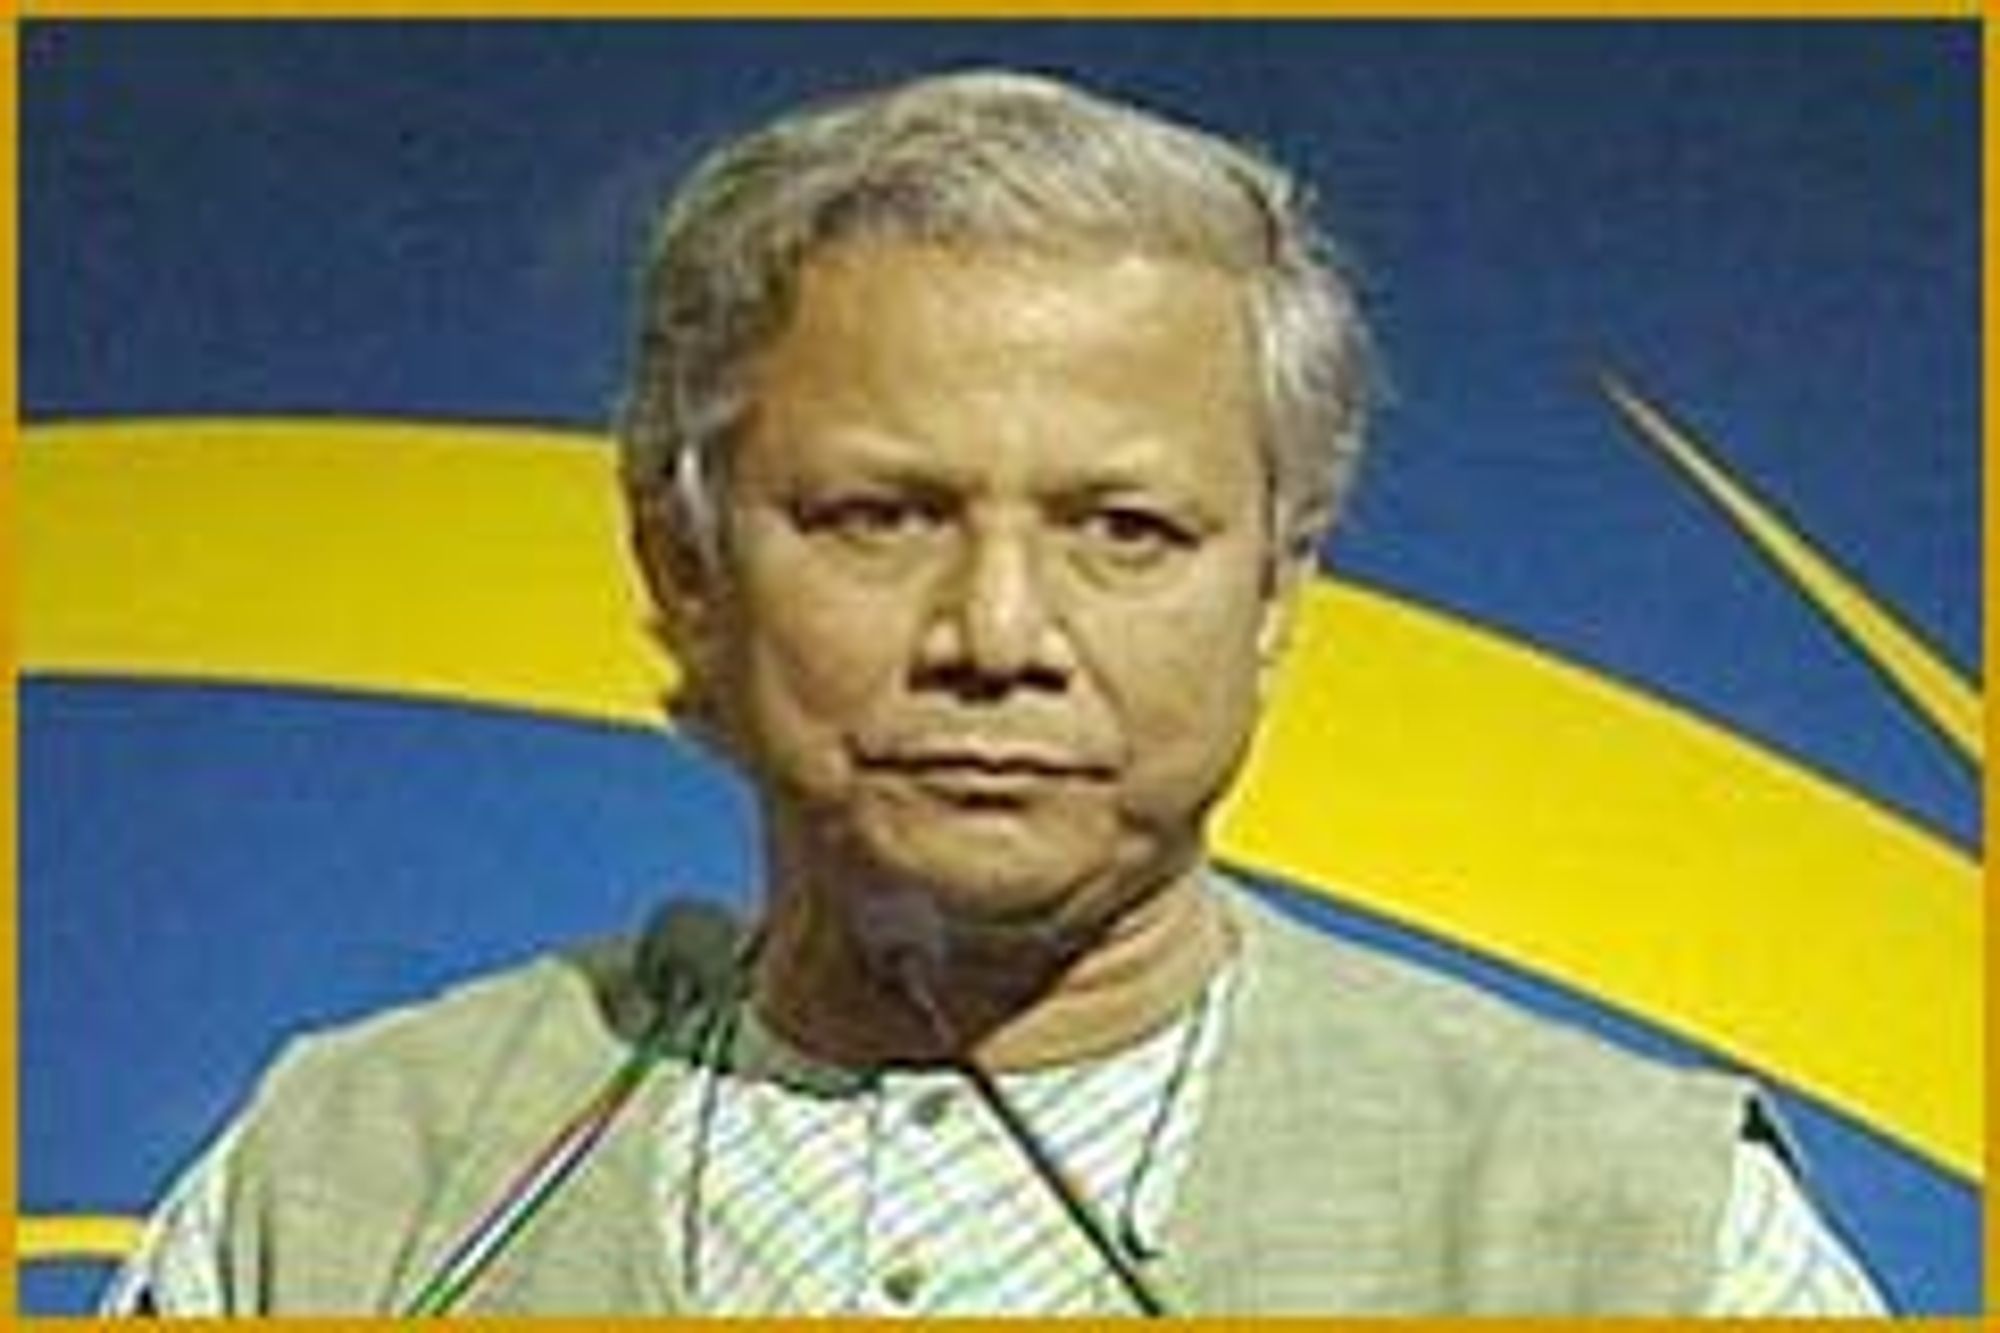 Yunus presset Telenor